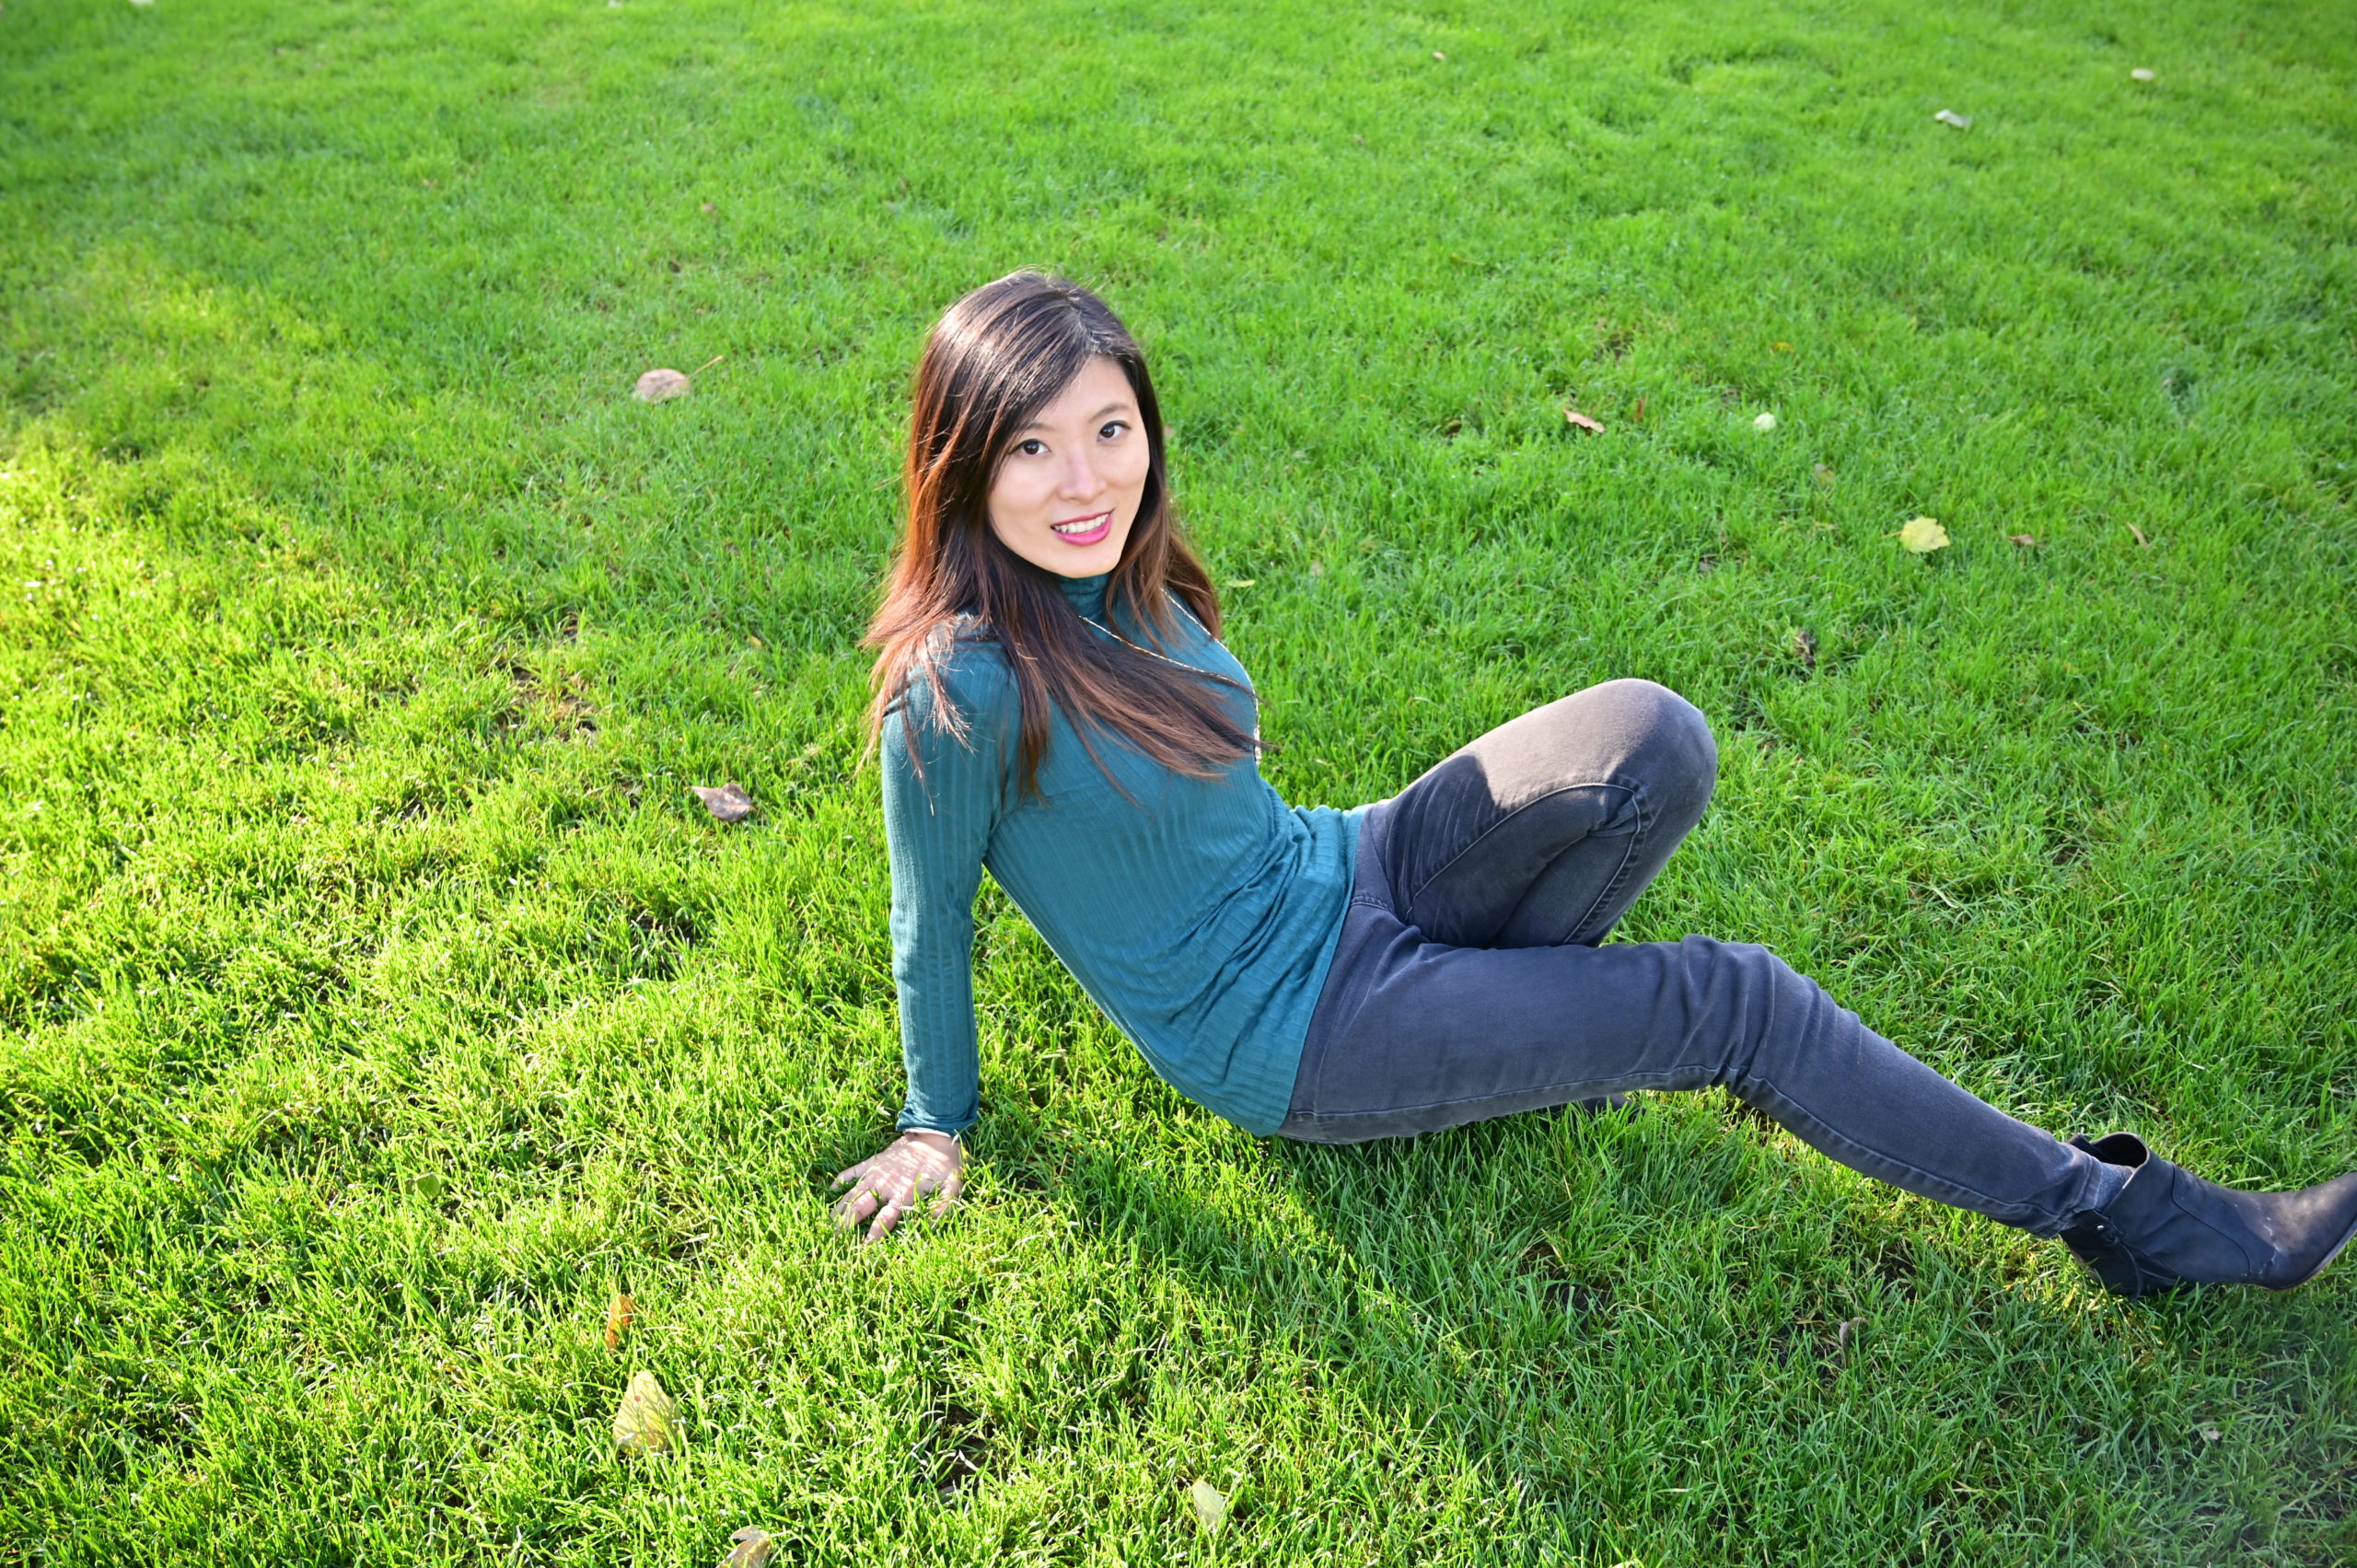 Coach Sixu wearing a green sweater is enjoying a relaxing moment on the grass.